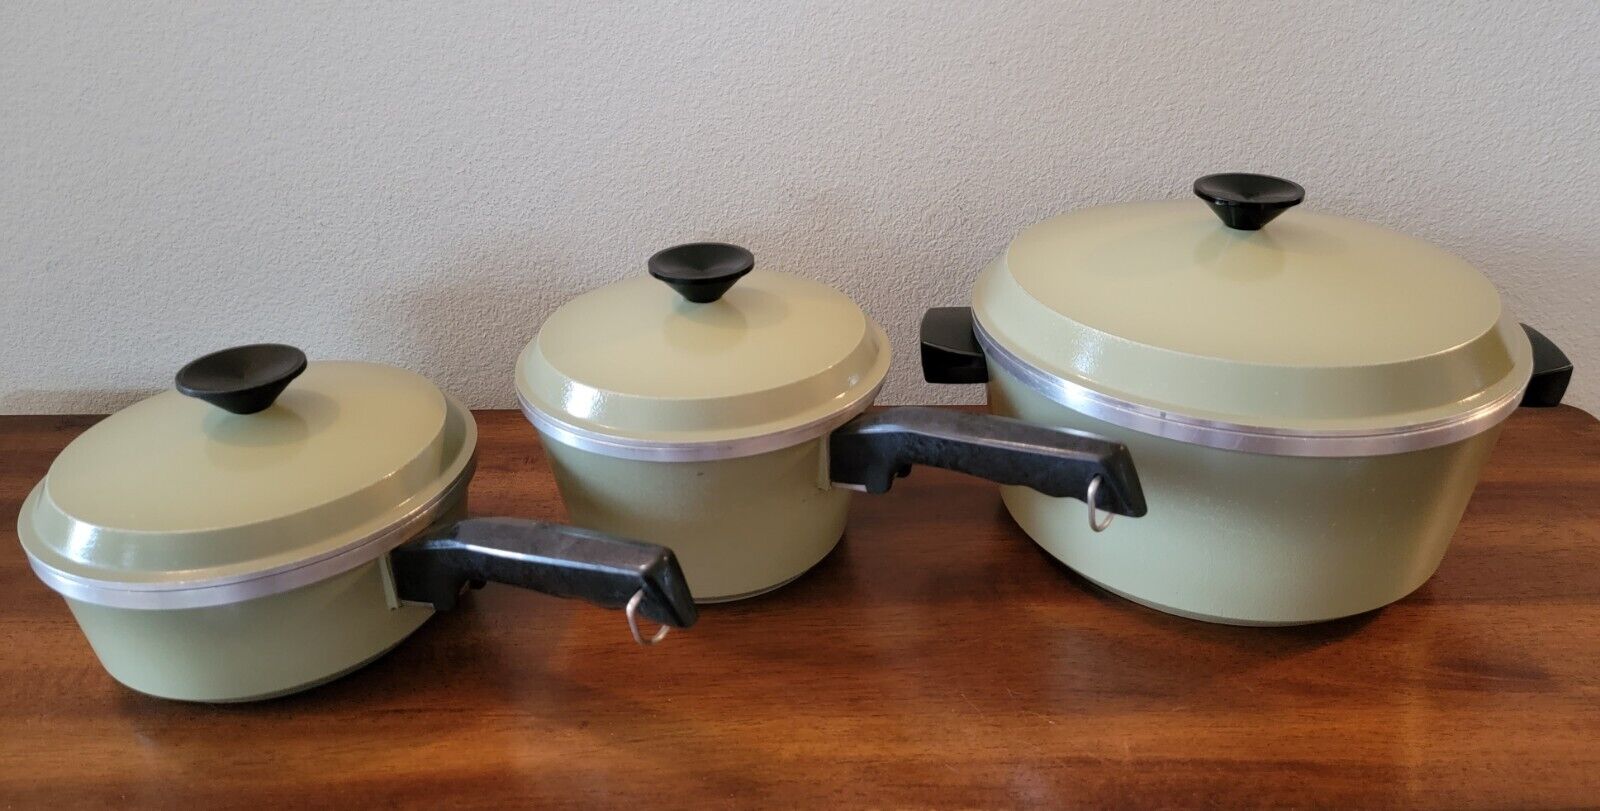 VTG Colorama Cookware by Regal Avocado Green 6 Piece Pot Set w/Lids. '60-70s.